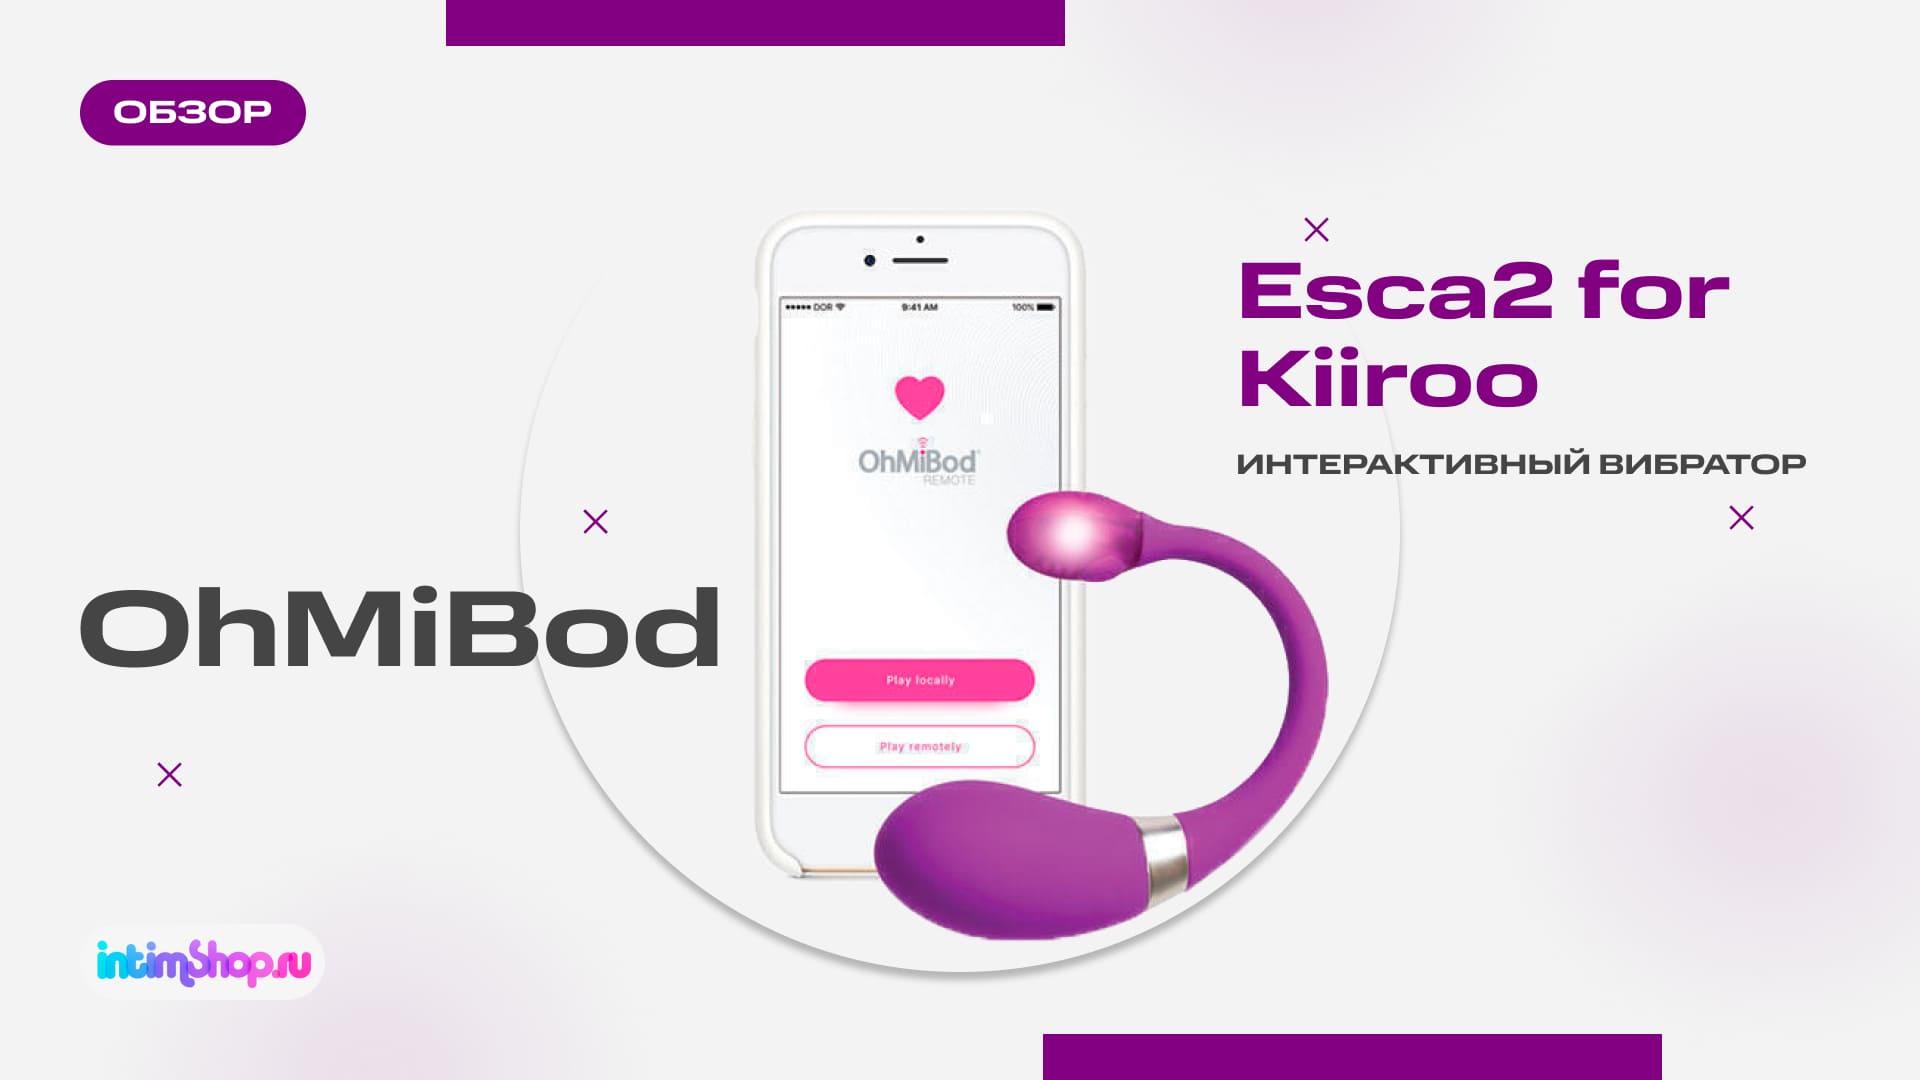 Интерактивный вибратор OhMiBod Esca2 for Kiiroo